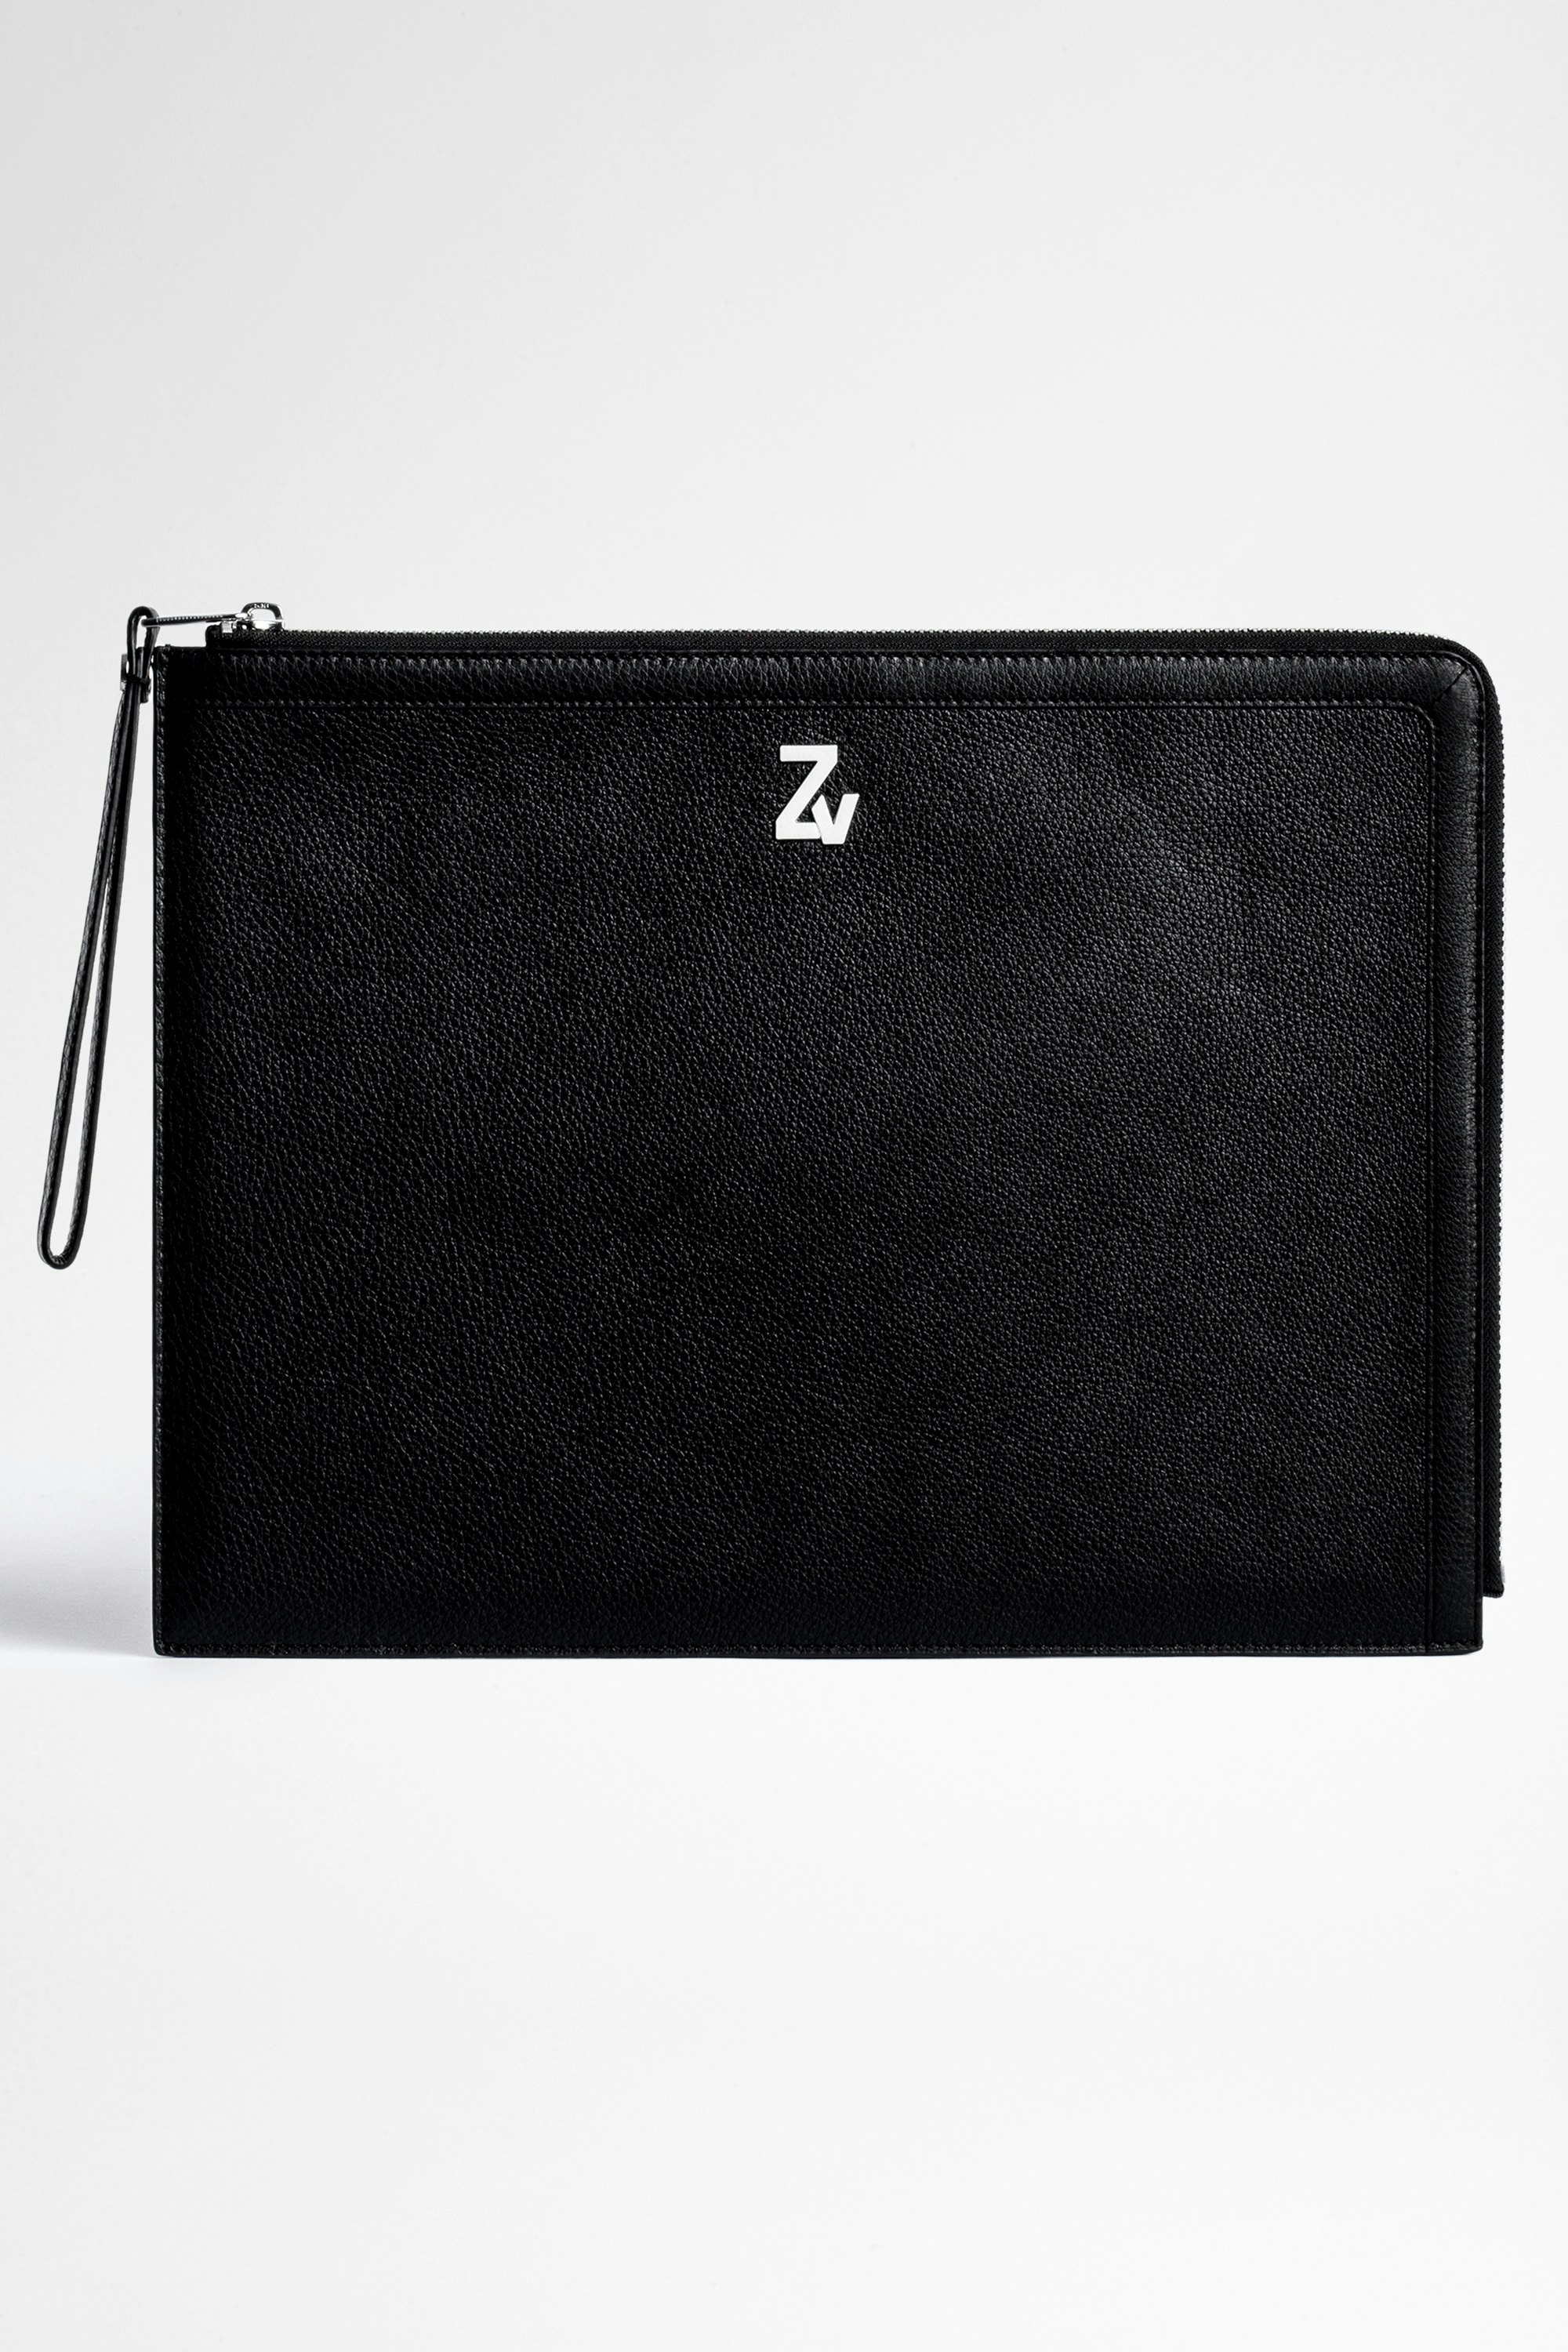 ZV Initiale John Pouch Men's black leather pouch